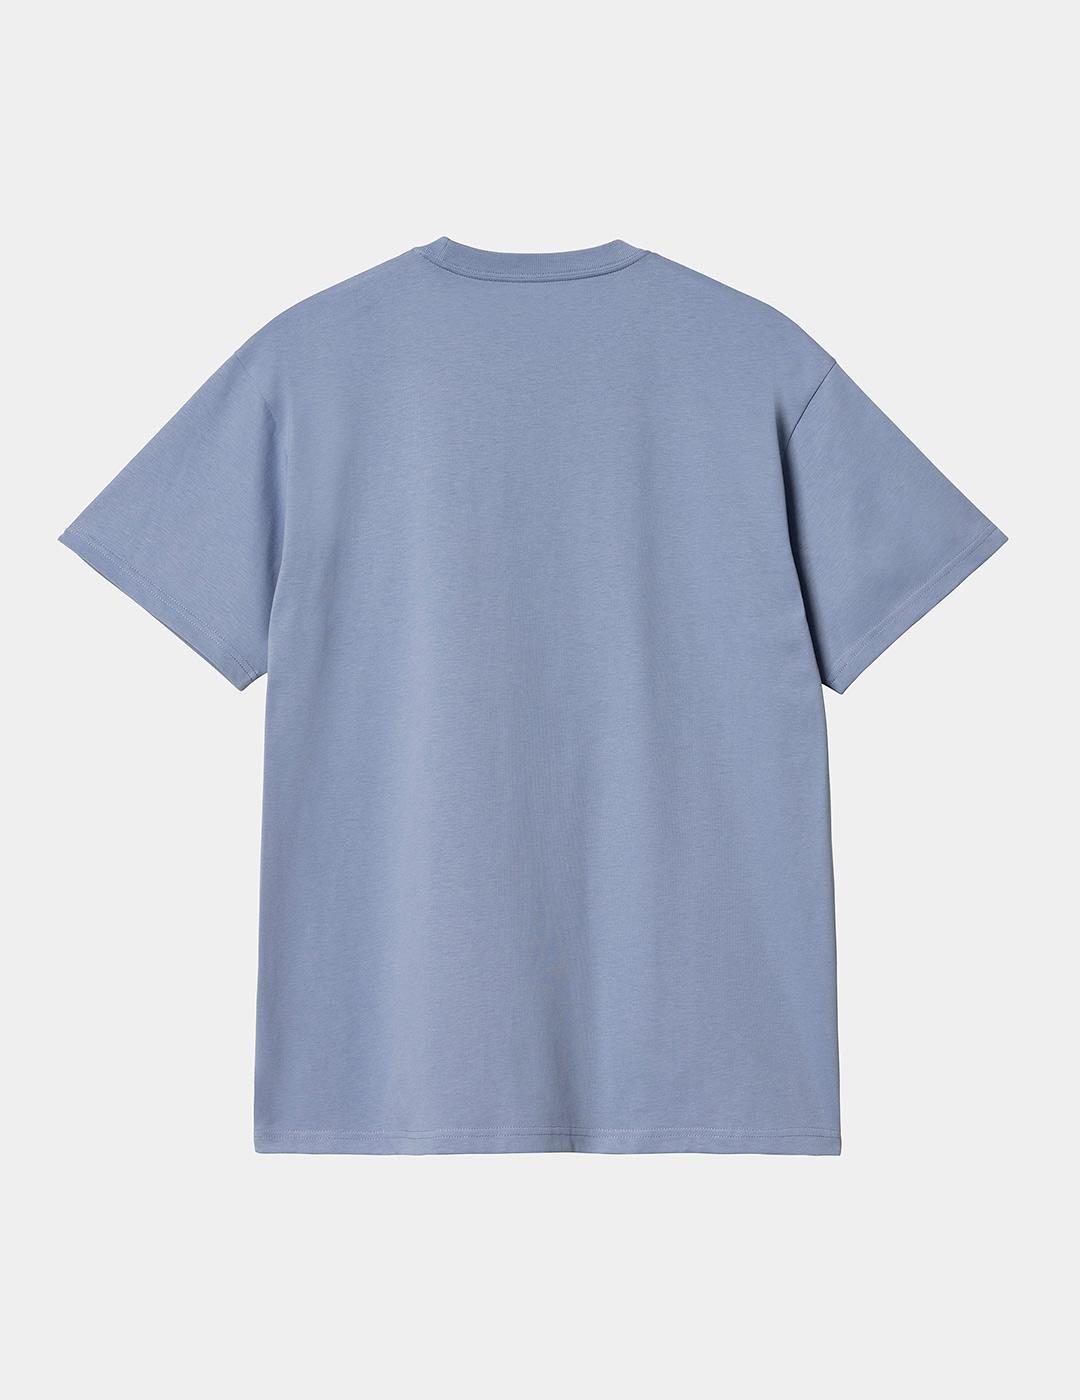 Camiseta CARHARTT CHASE - Charm Blue/Gold